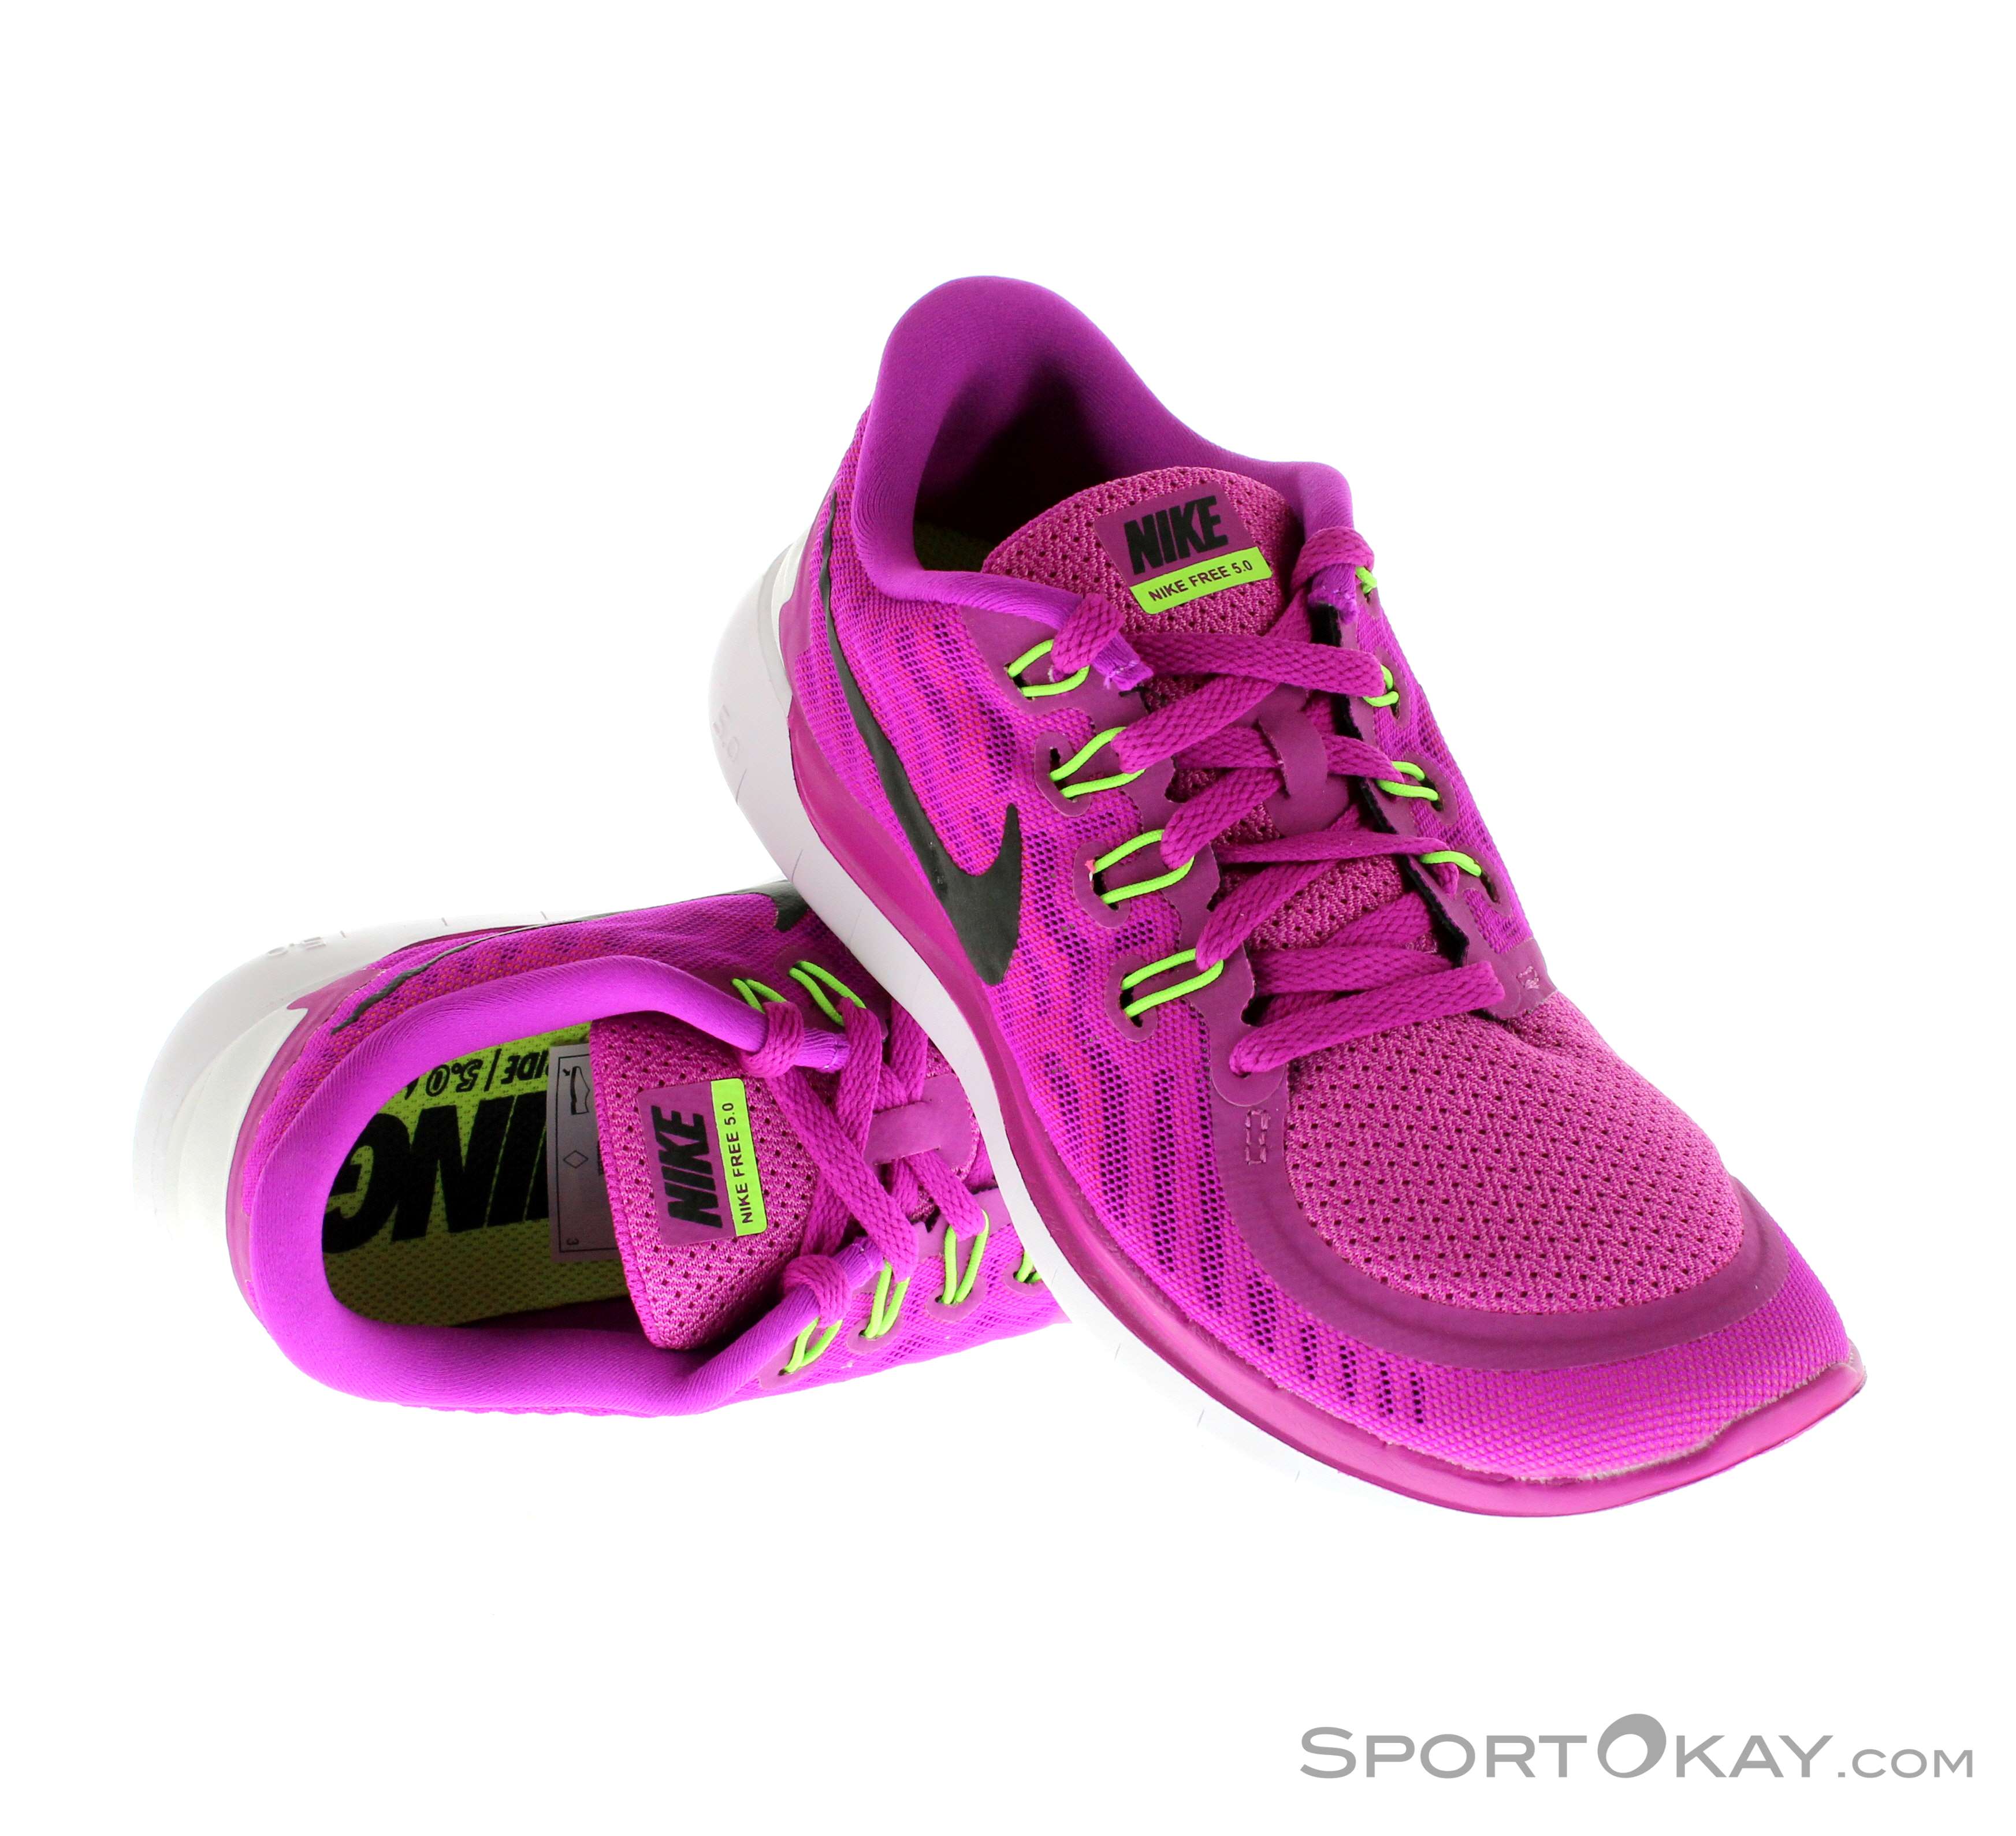 Nike Free 5.0 Damen - Fitnessschuhe - Fitnessschuhe - Fitness - Alle